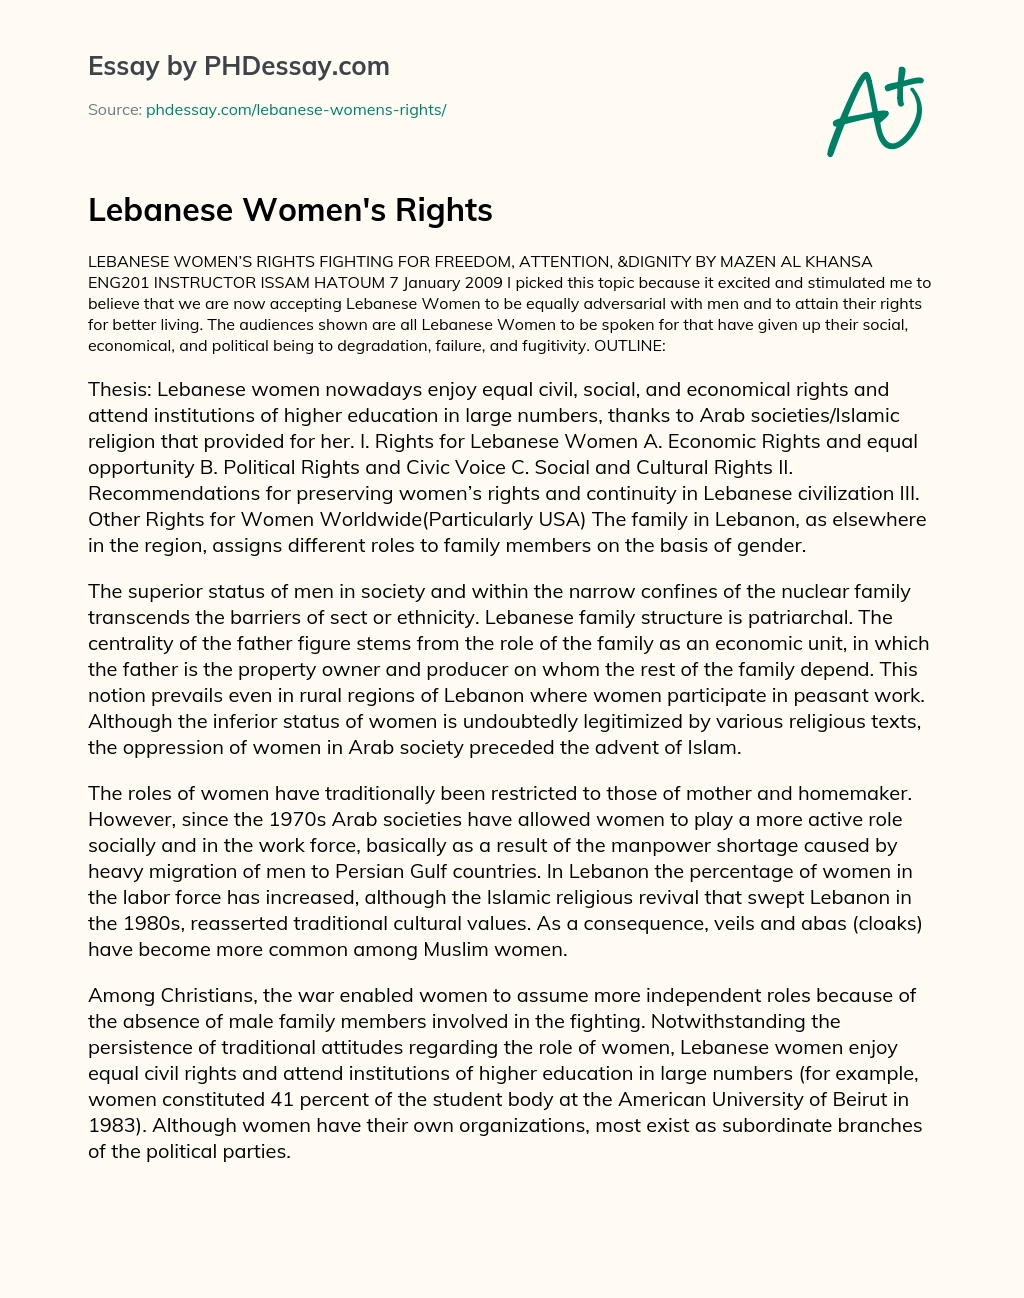 Lebanese Women’s Rights essay